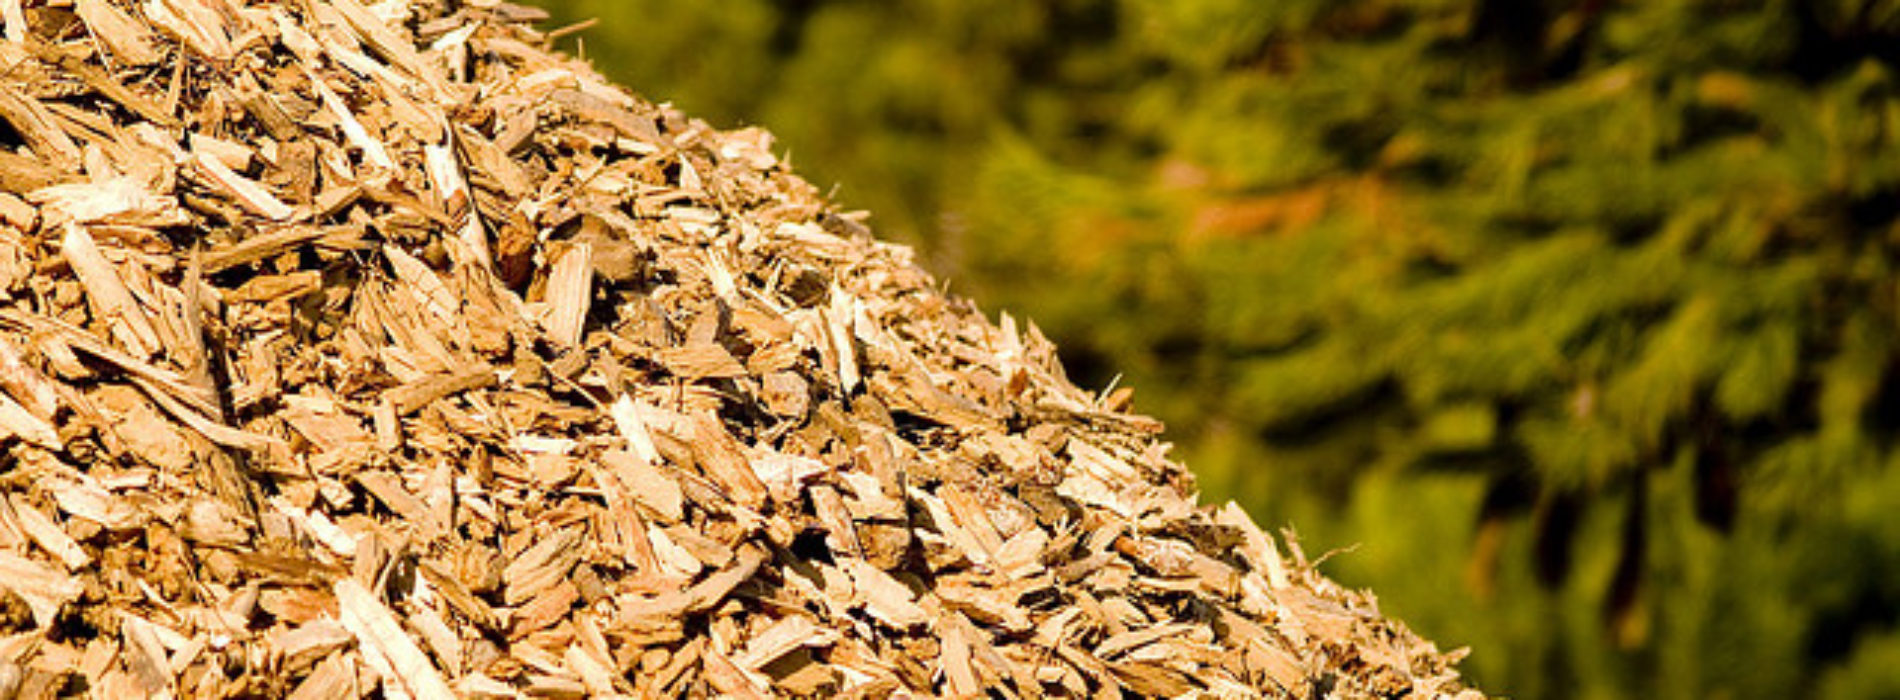 Presidente da Faeal destaca importância da biomassa para a agricultura